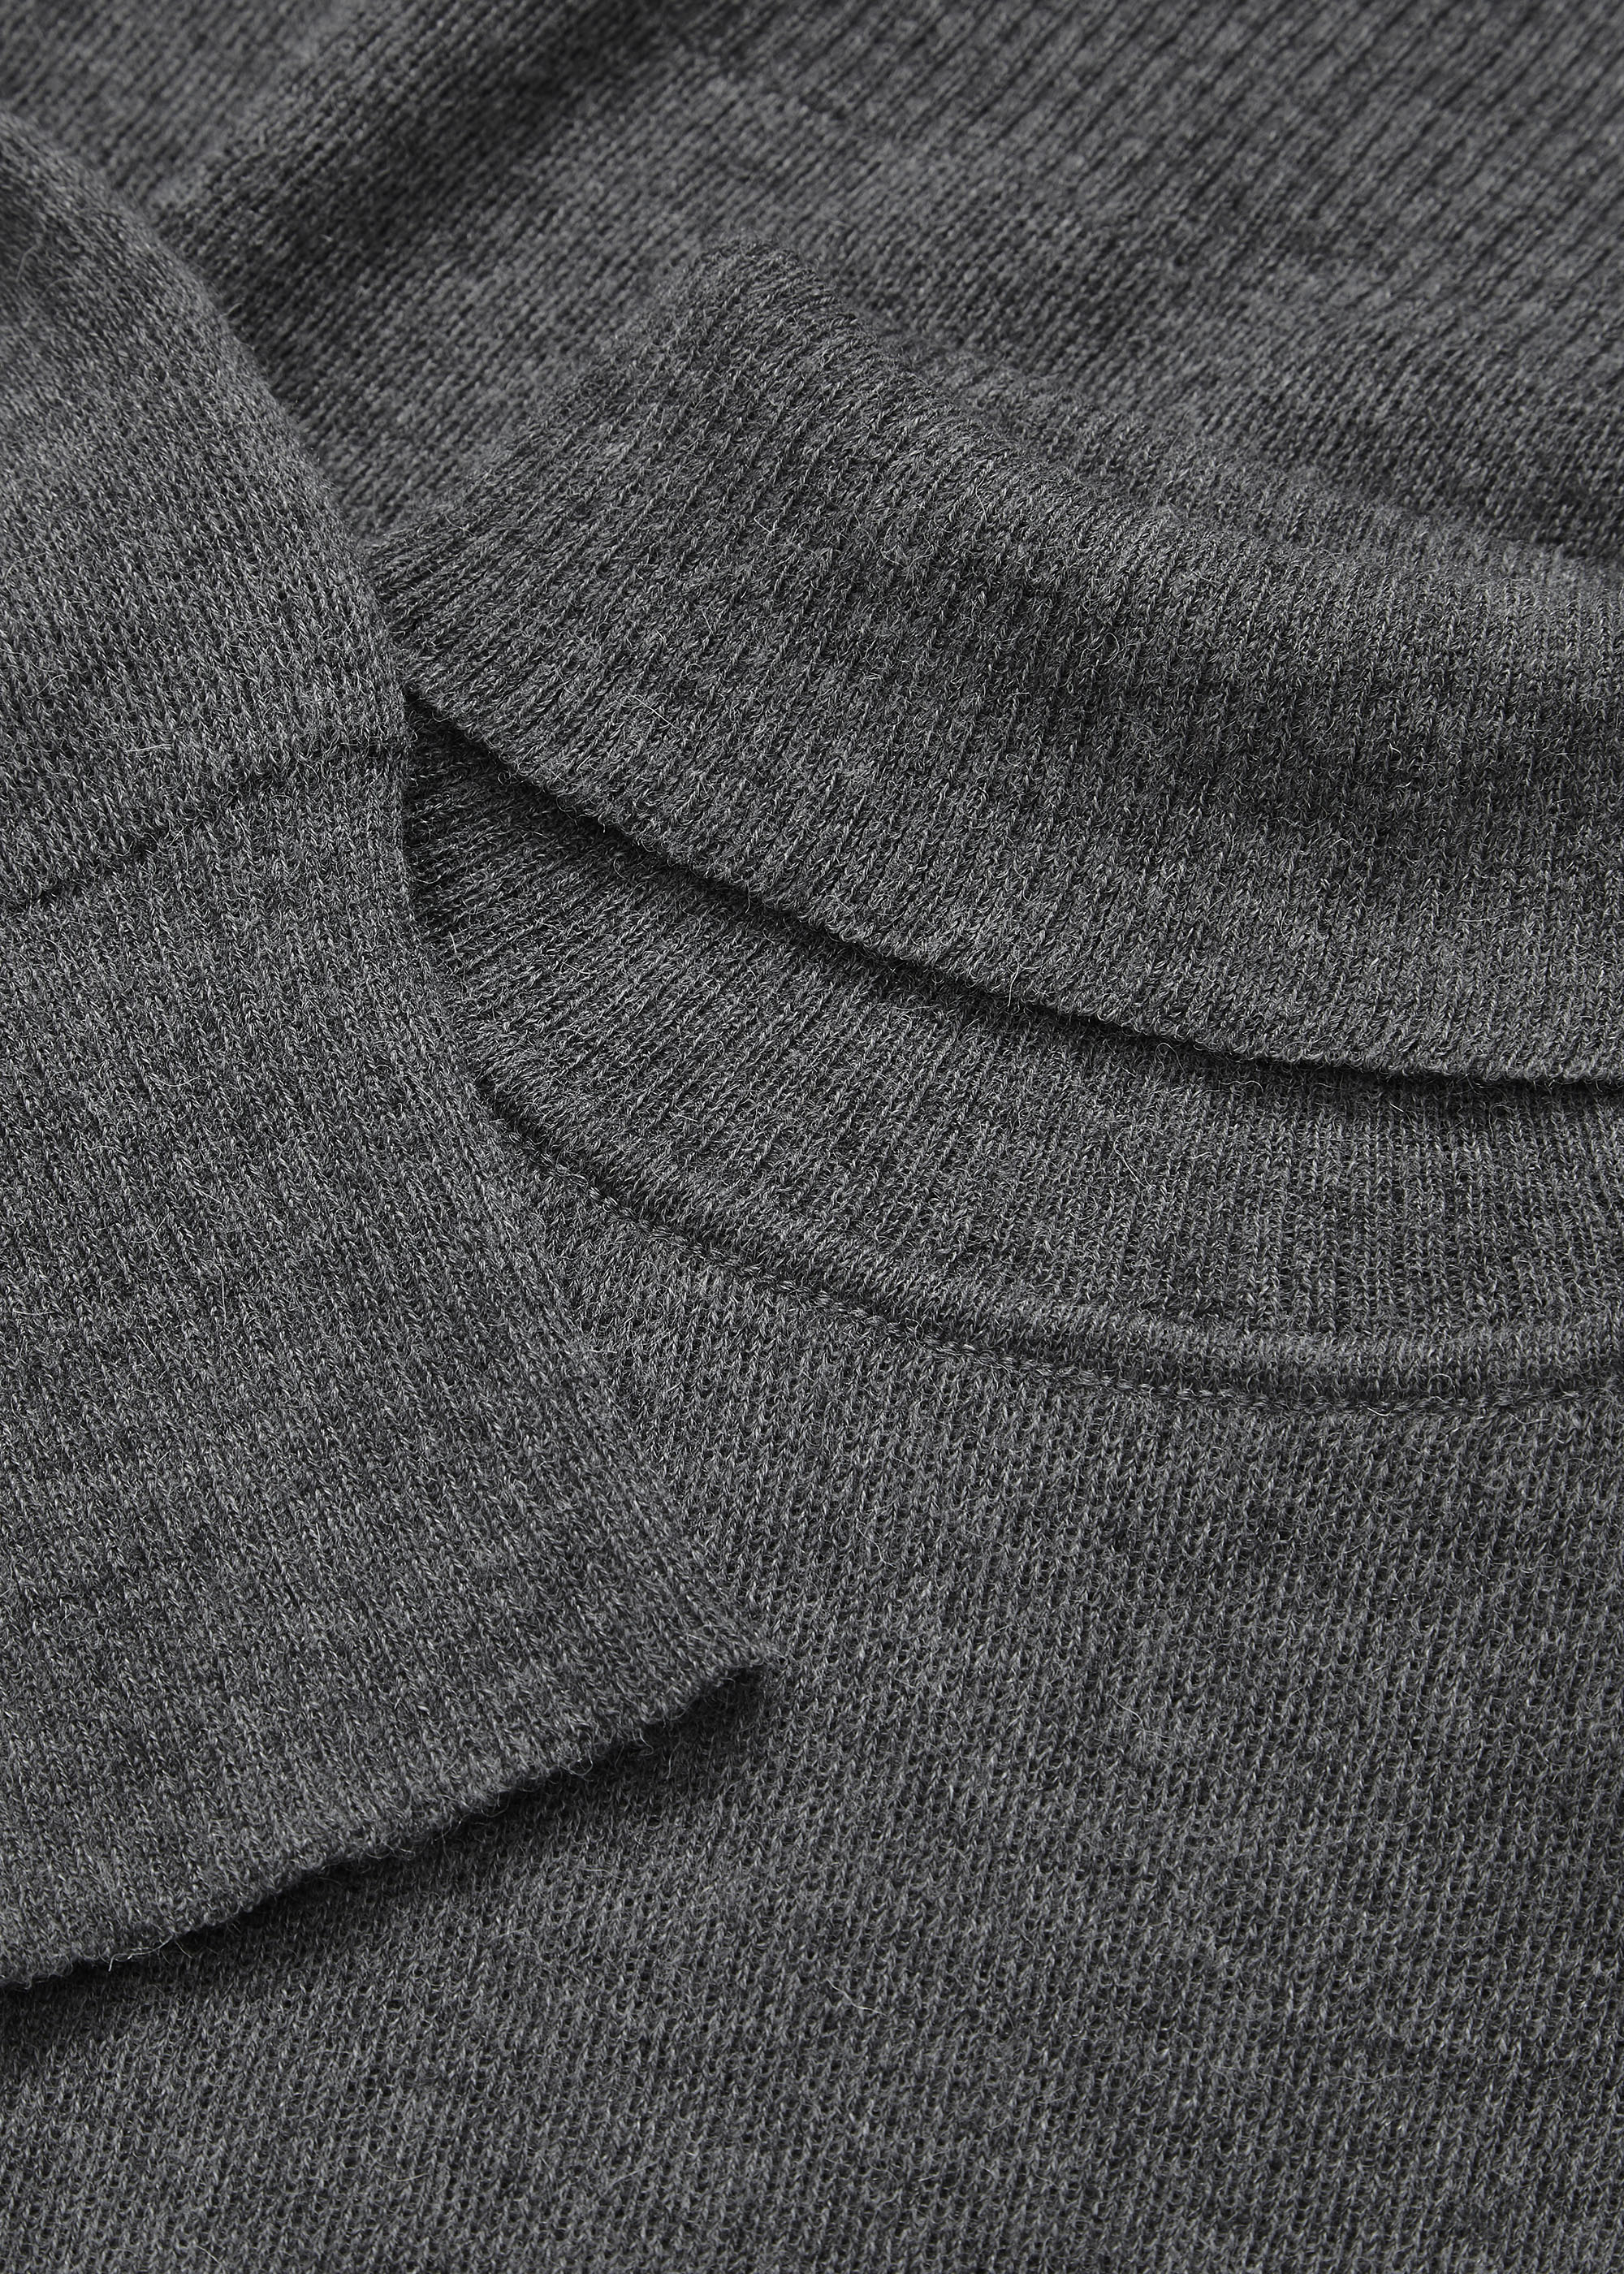 Strickwaren - Akina sweater 